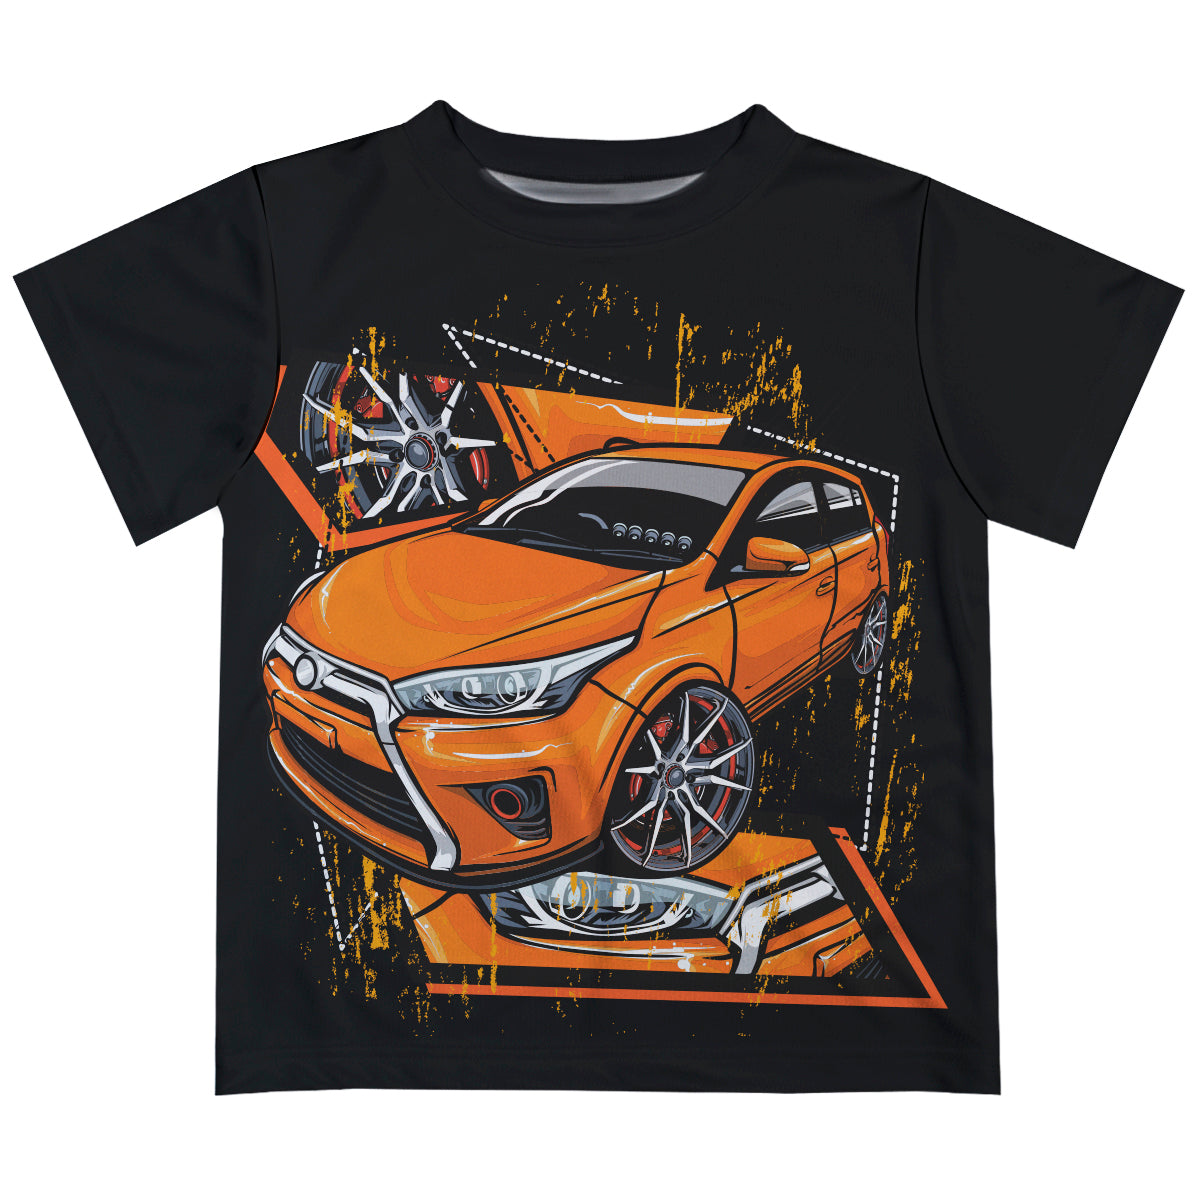 Racing Car Black Short Sleeve Tee Shirt - Wimziy&Co.